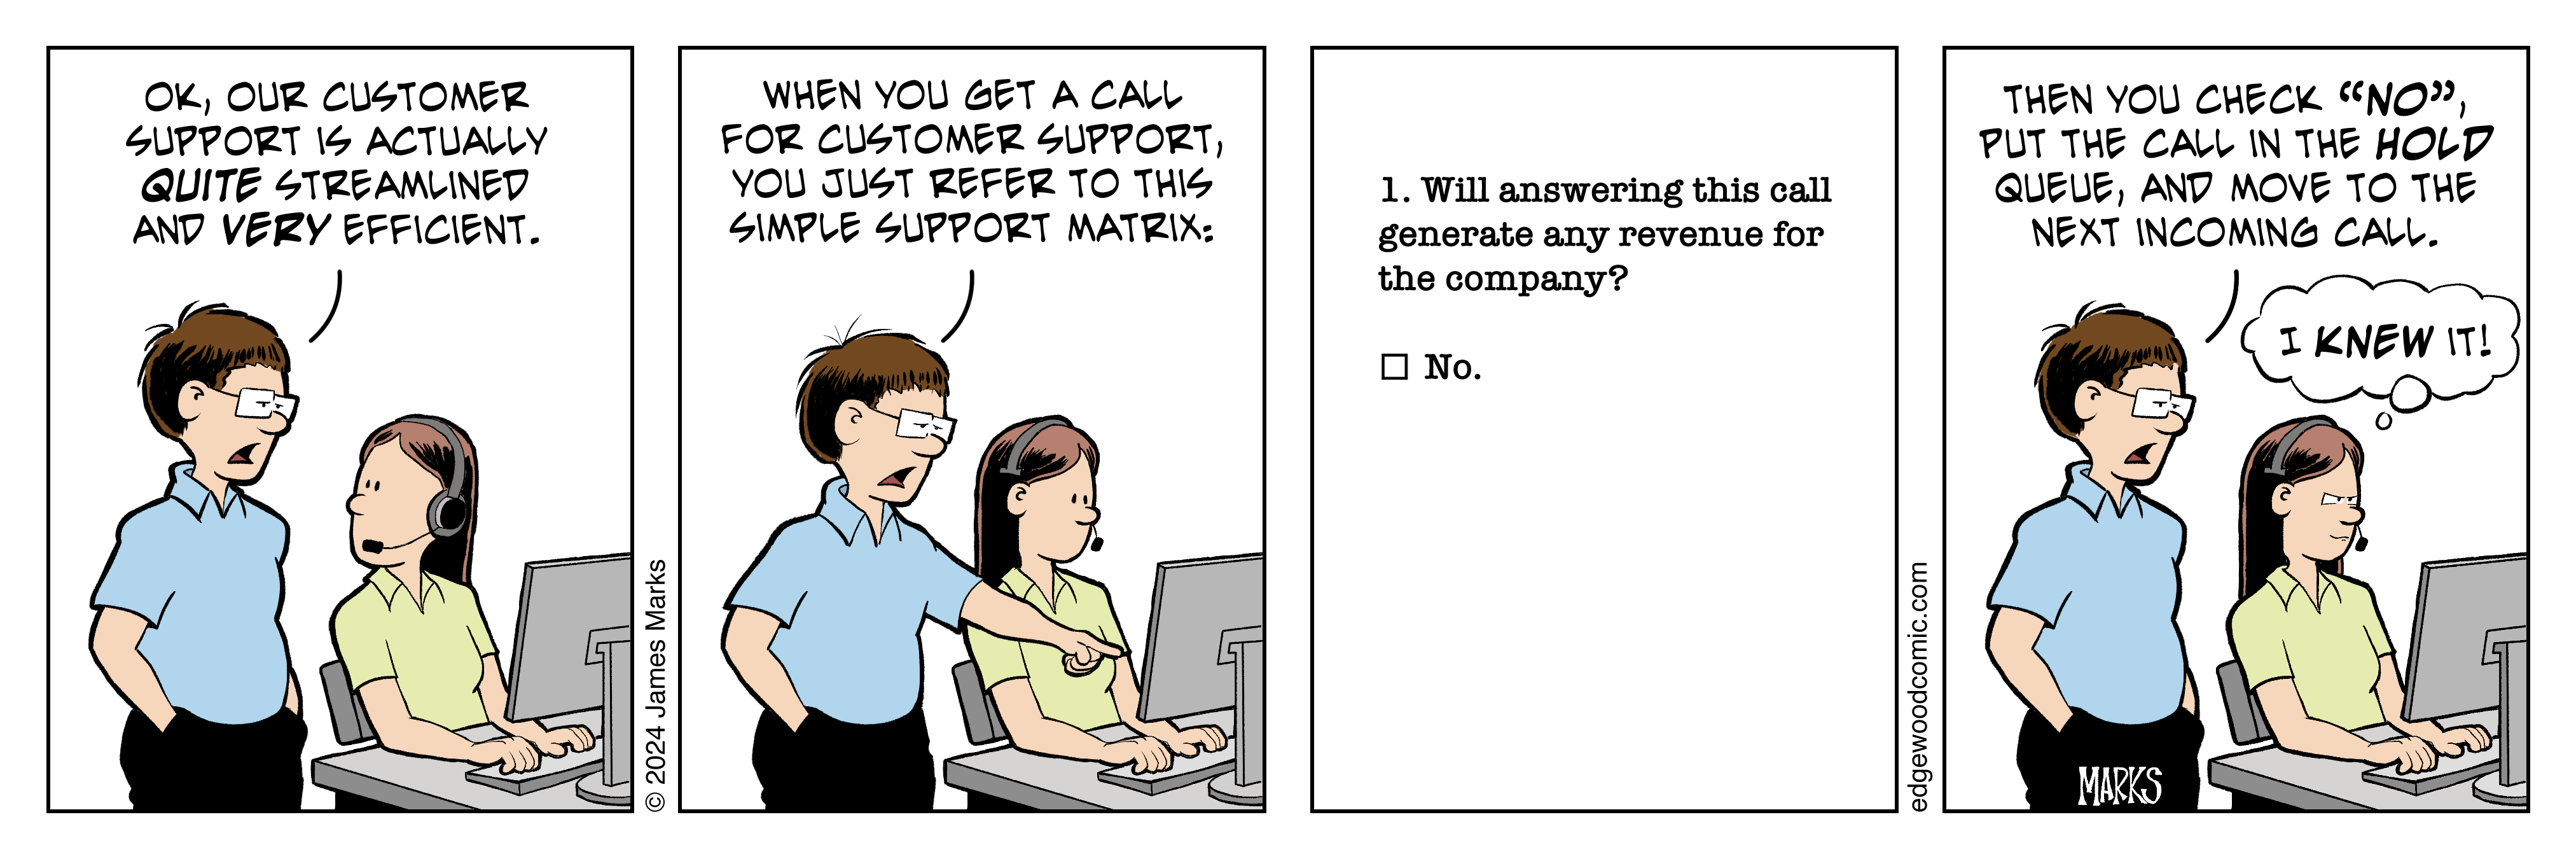 Customer support comic strip